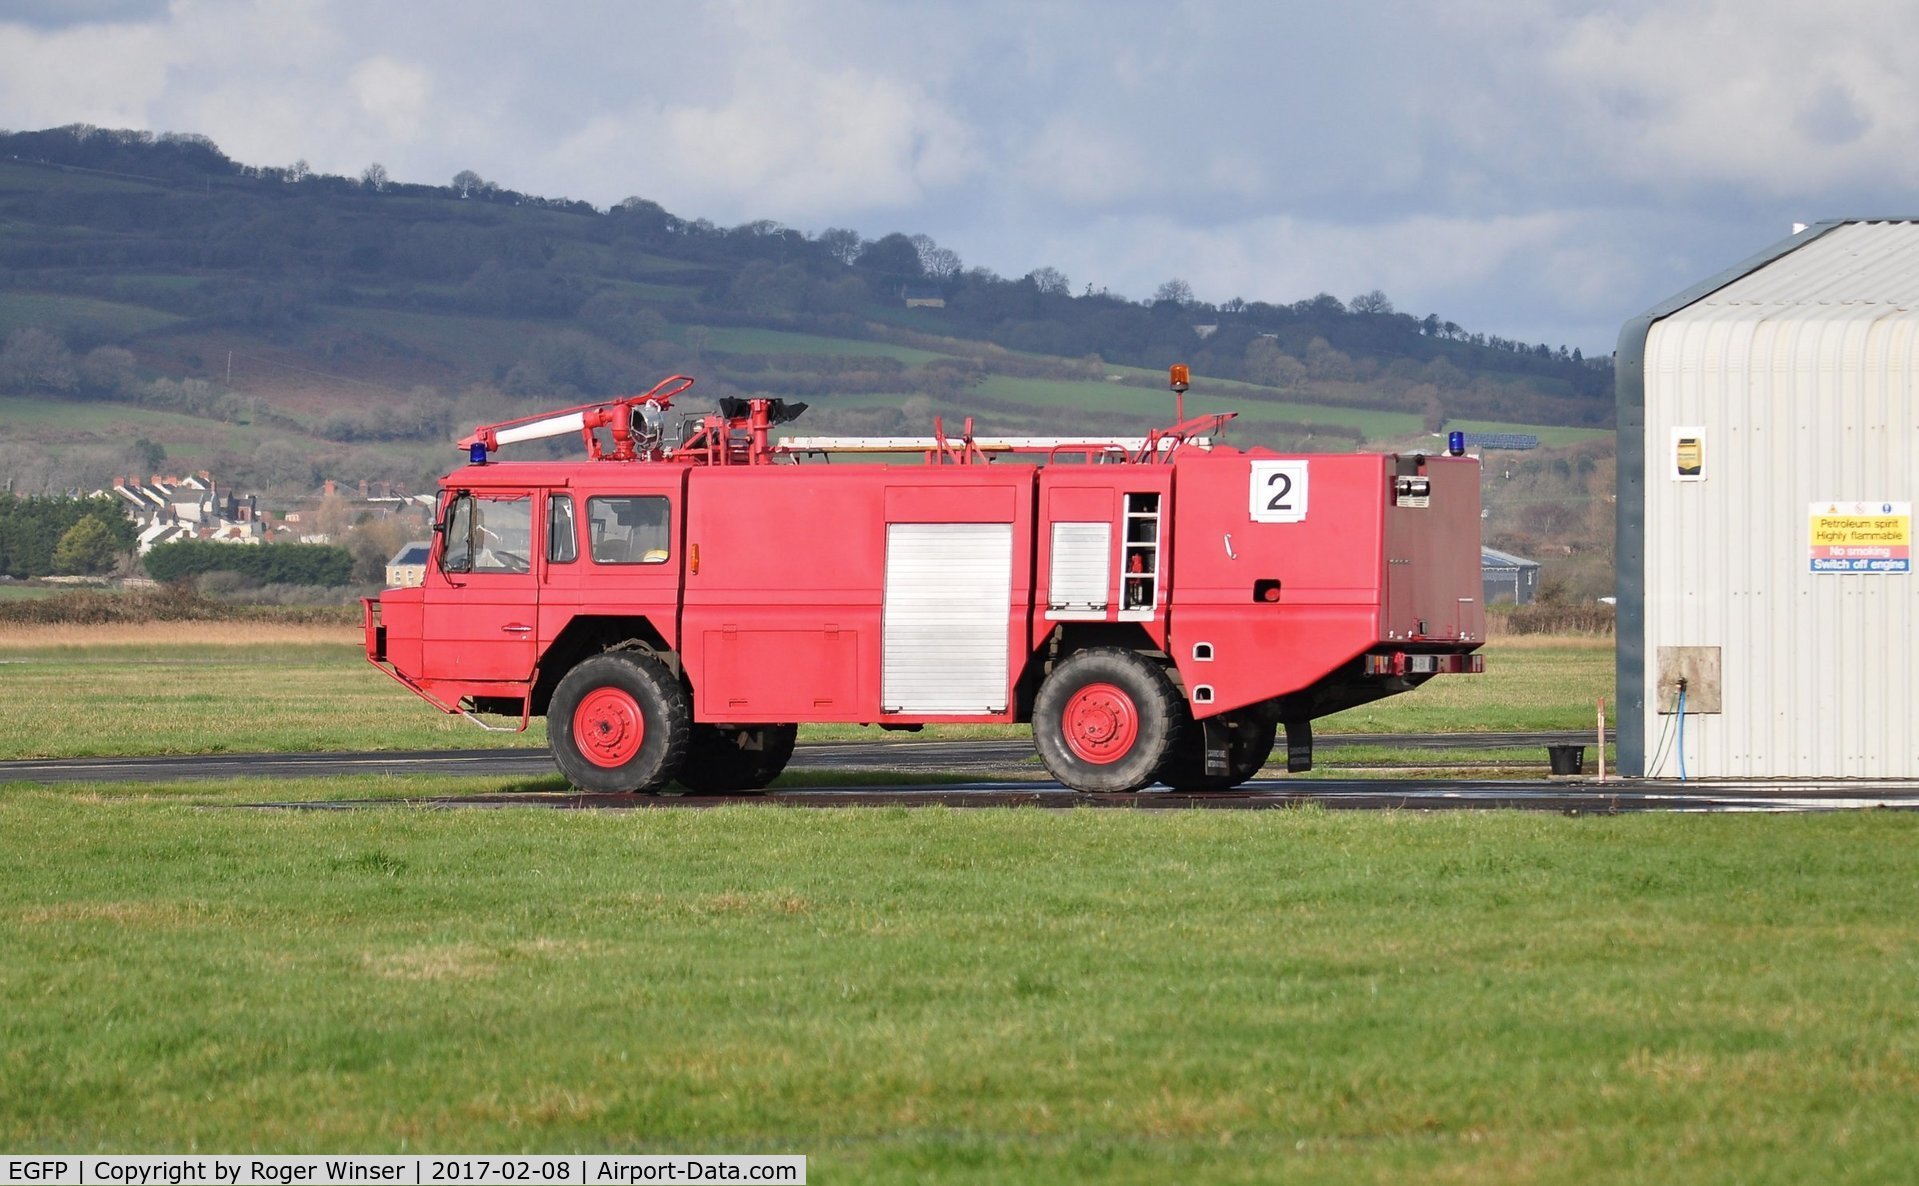 Pembrey Airport, Pembrey, Wales United Kingdom (EGFP) - Ex-Royal Navy Carmichael Fire and Rescue tender No.2)